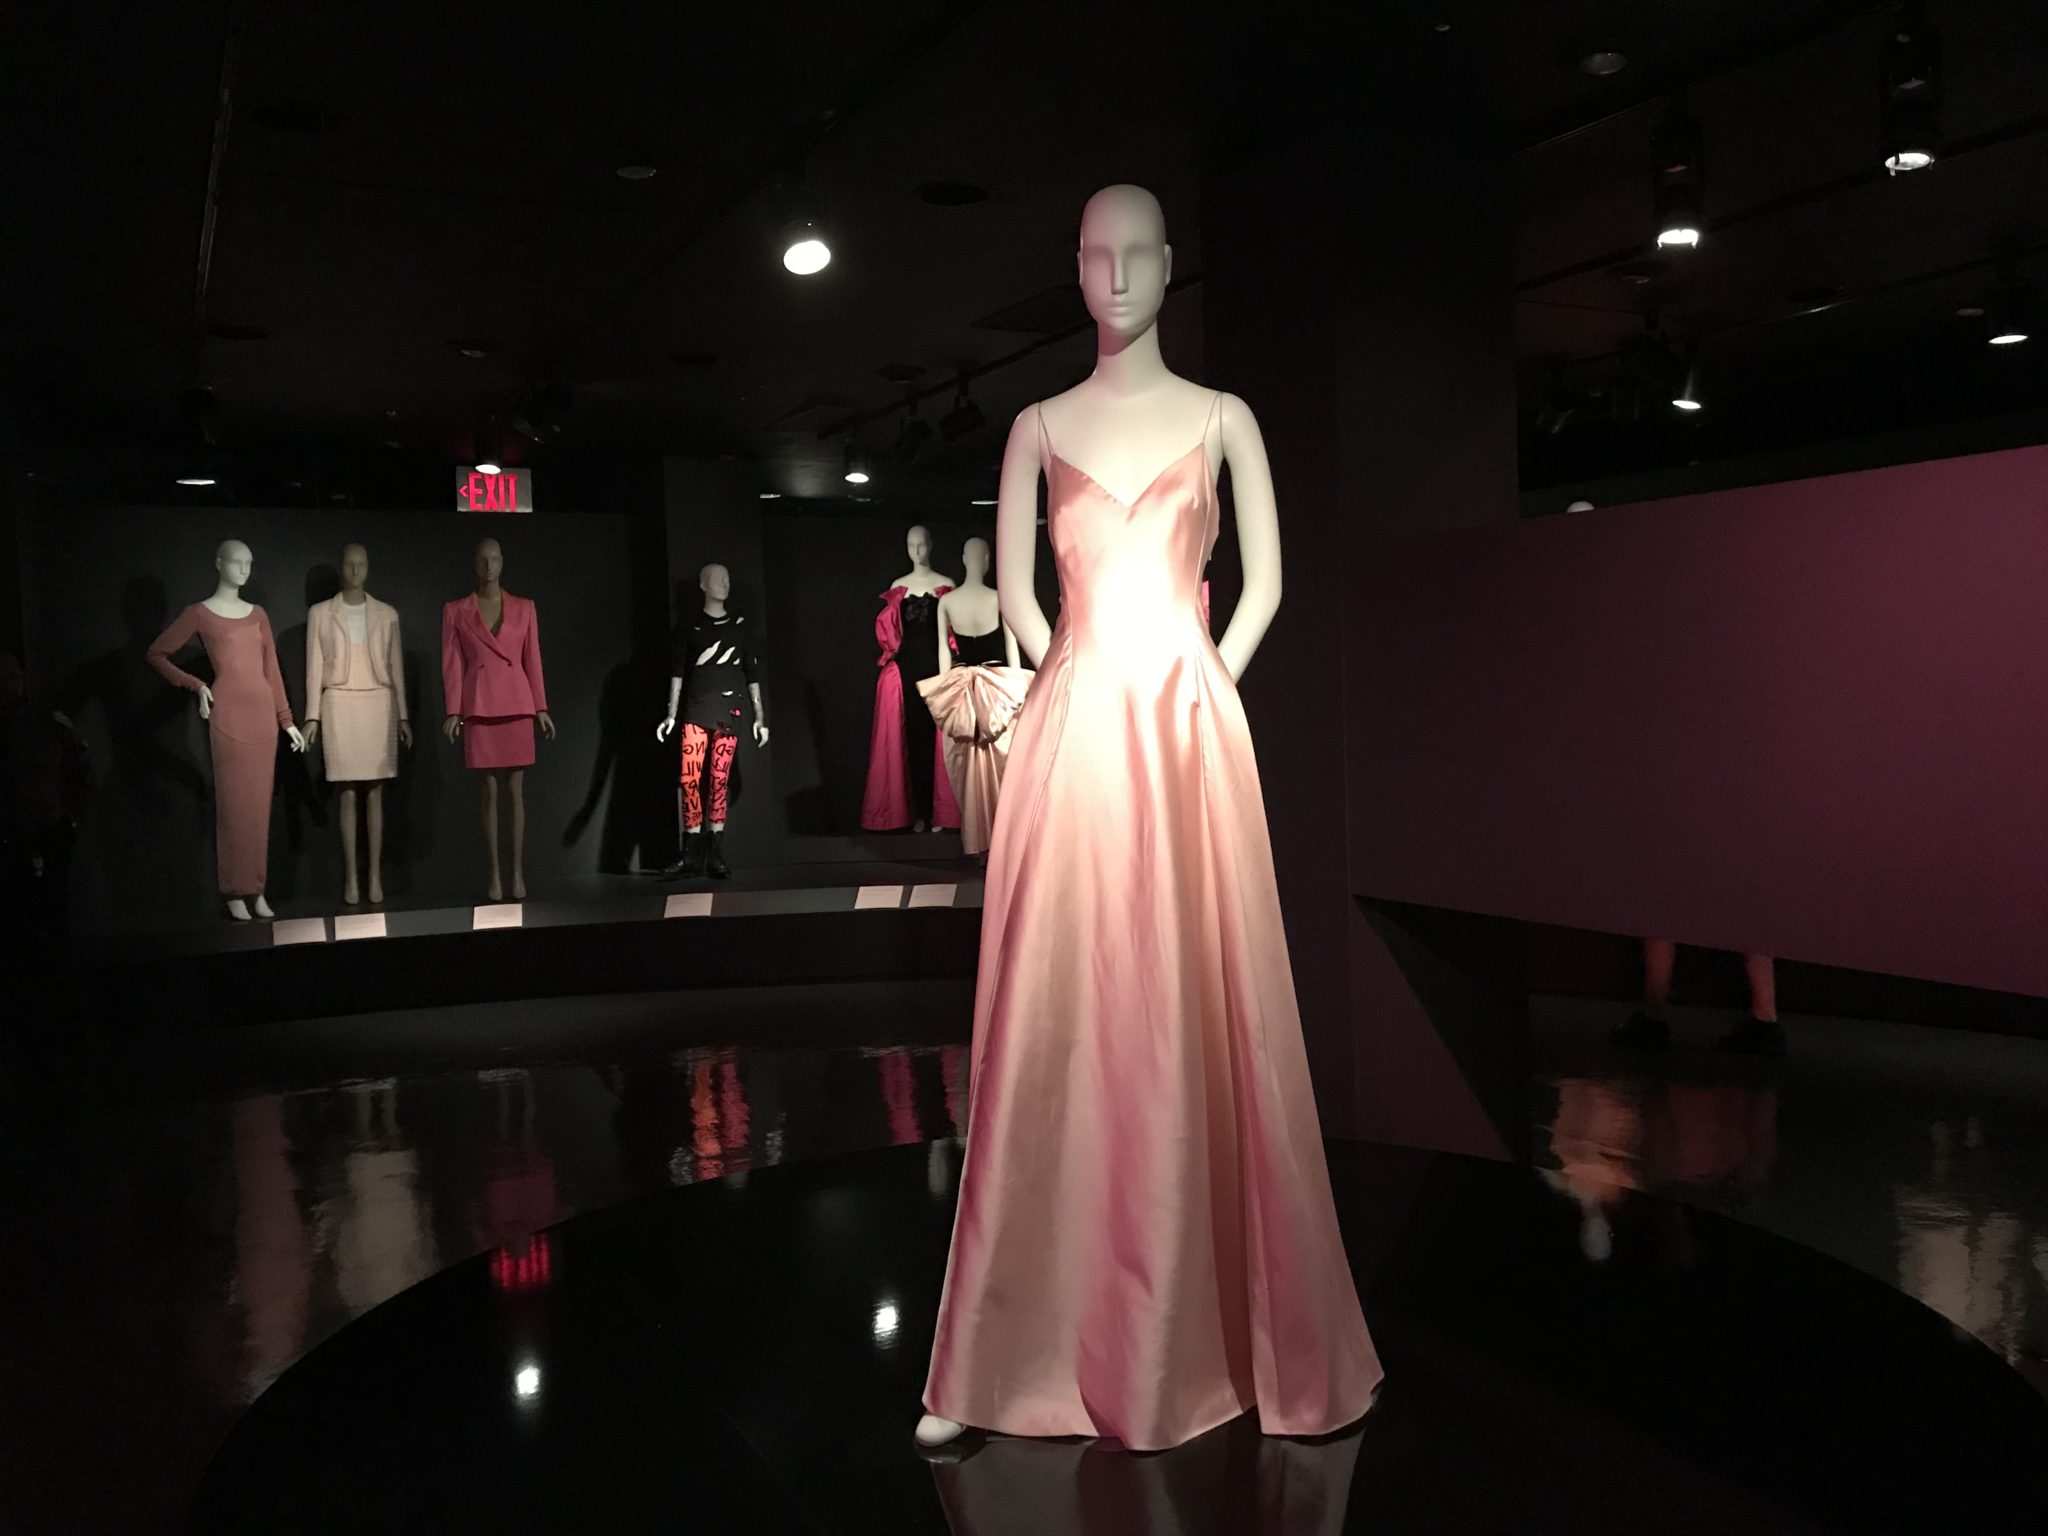 Gwyneth Paltrow's Ralph Lauren's pink gown in 1999 